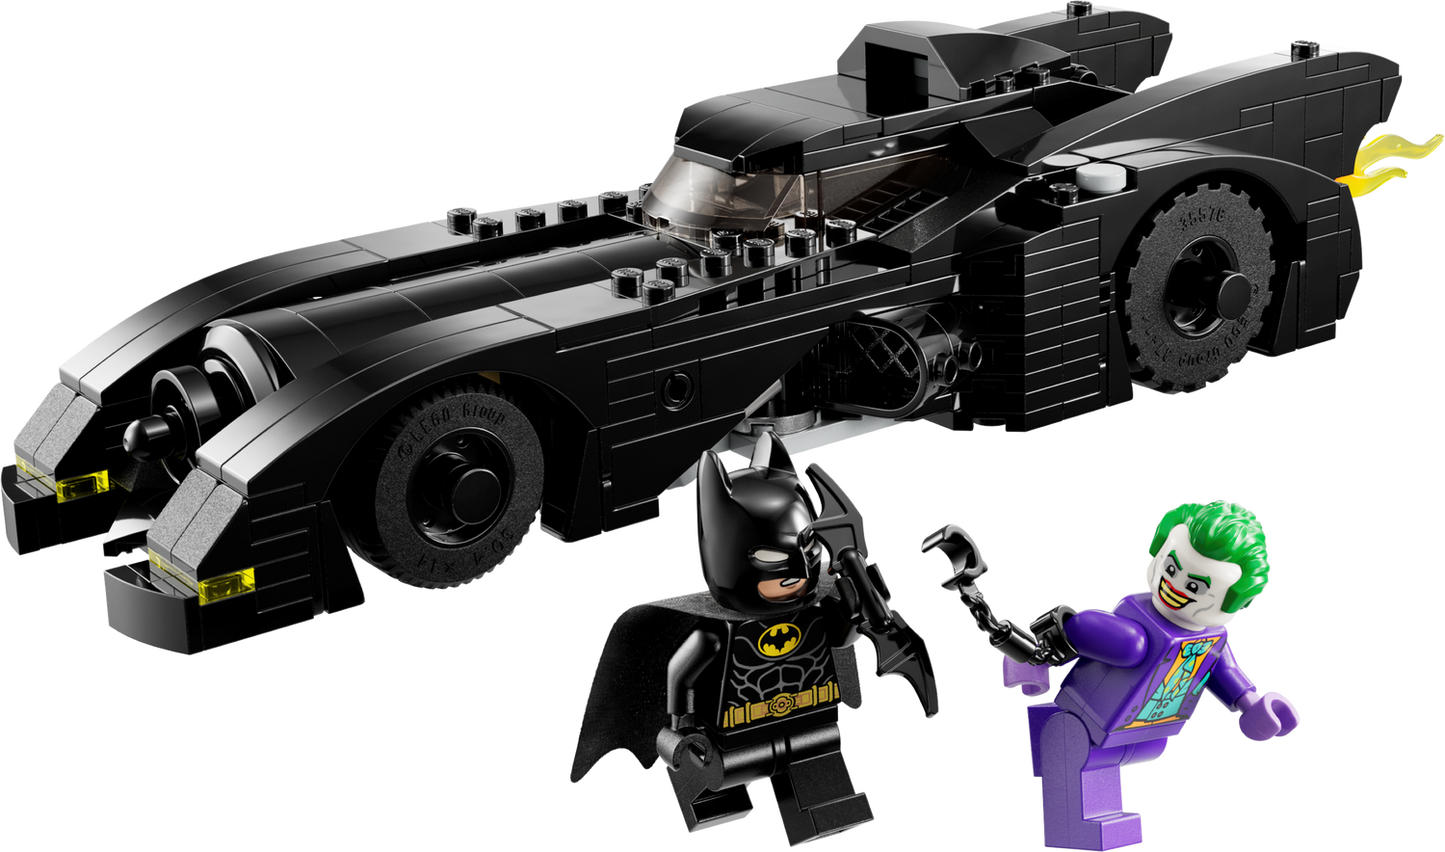 Batman 76224 Batmobile: Batman verfolgt den Joker